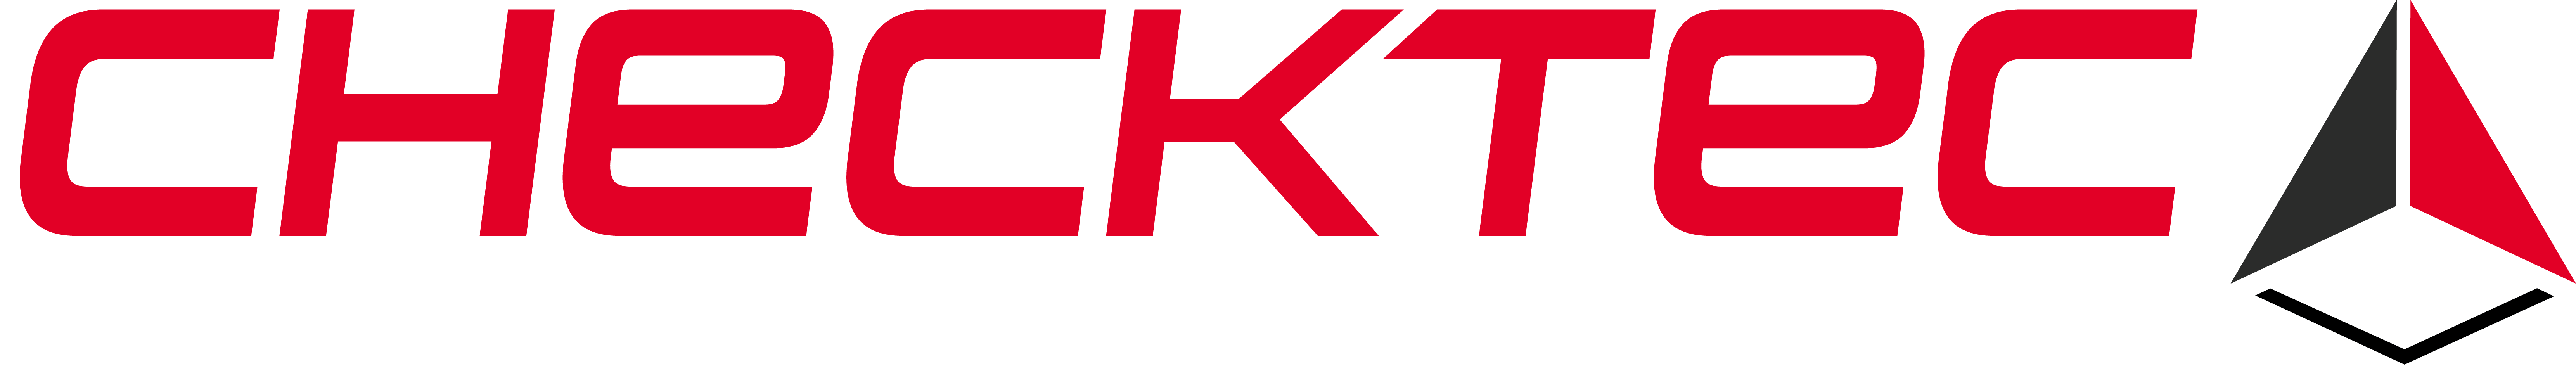 CheckTec Informationstechnik